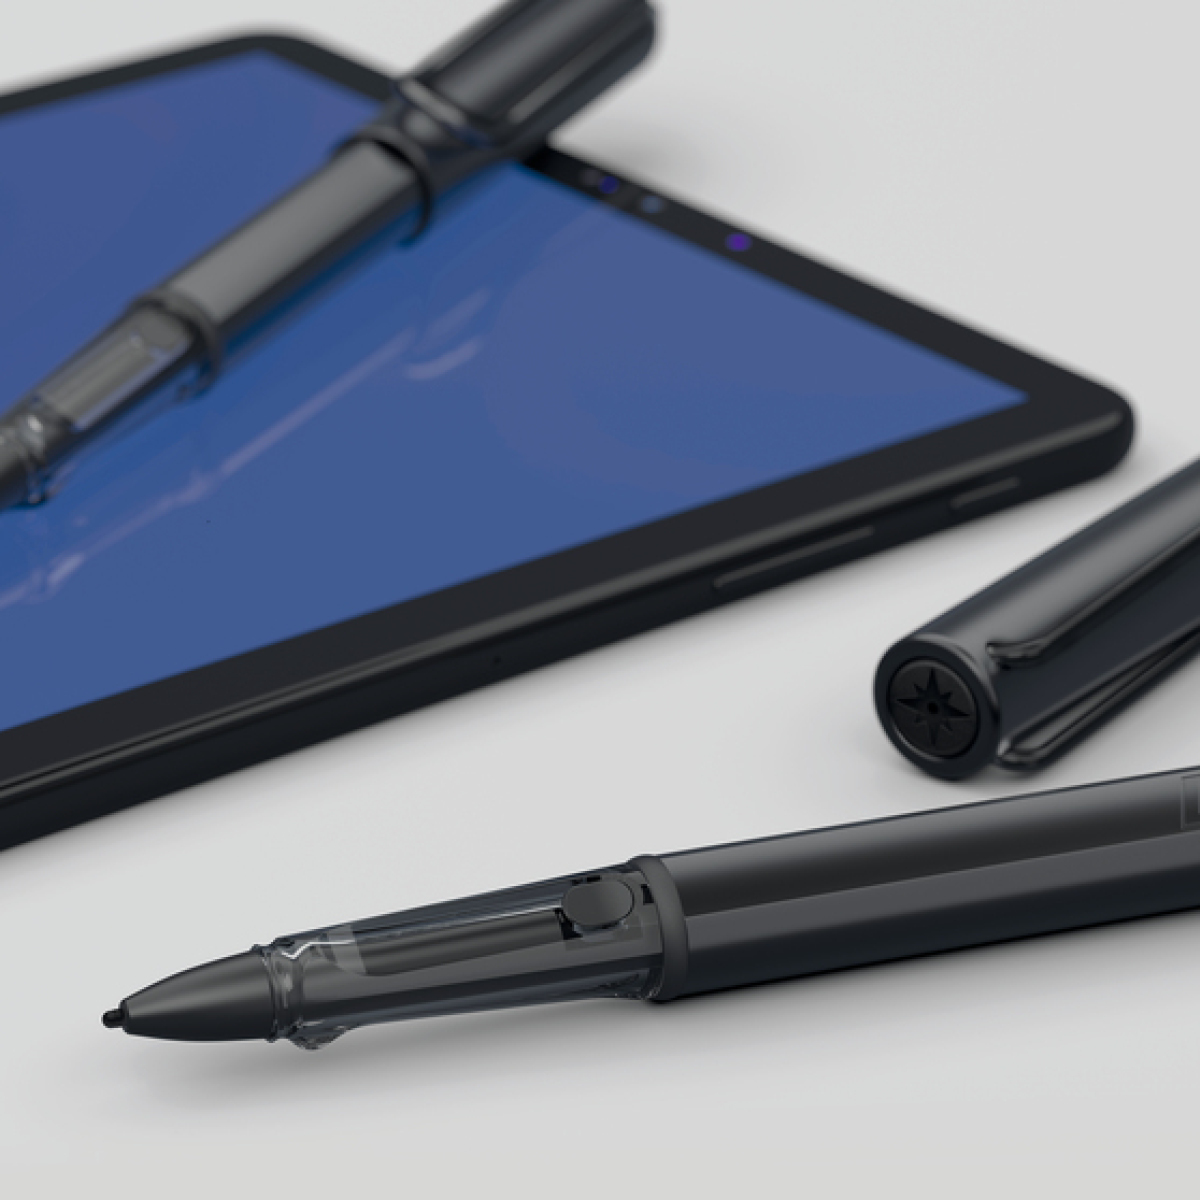 AL-star Black EMR POM Digital Writing Pen in the group Pens / Fine Writing / Gift Pens at Pen Store (102121)